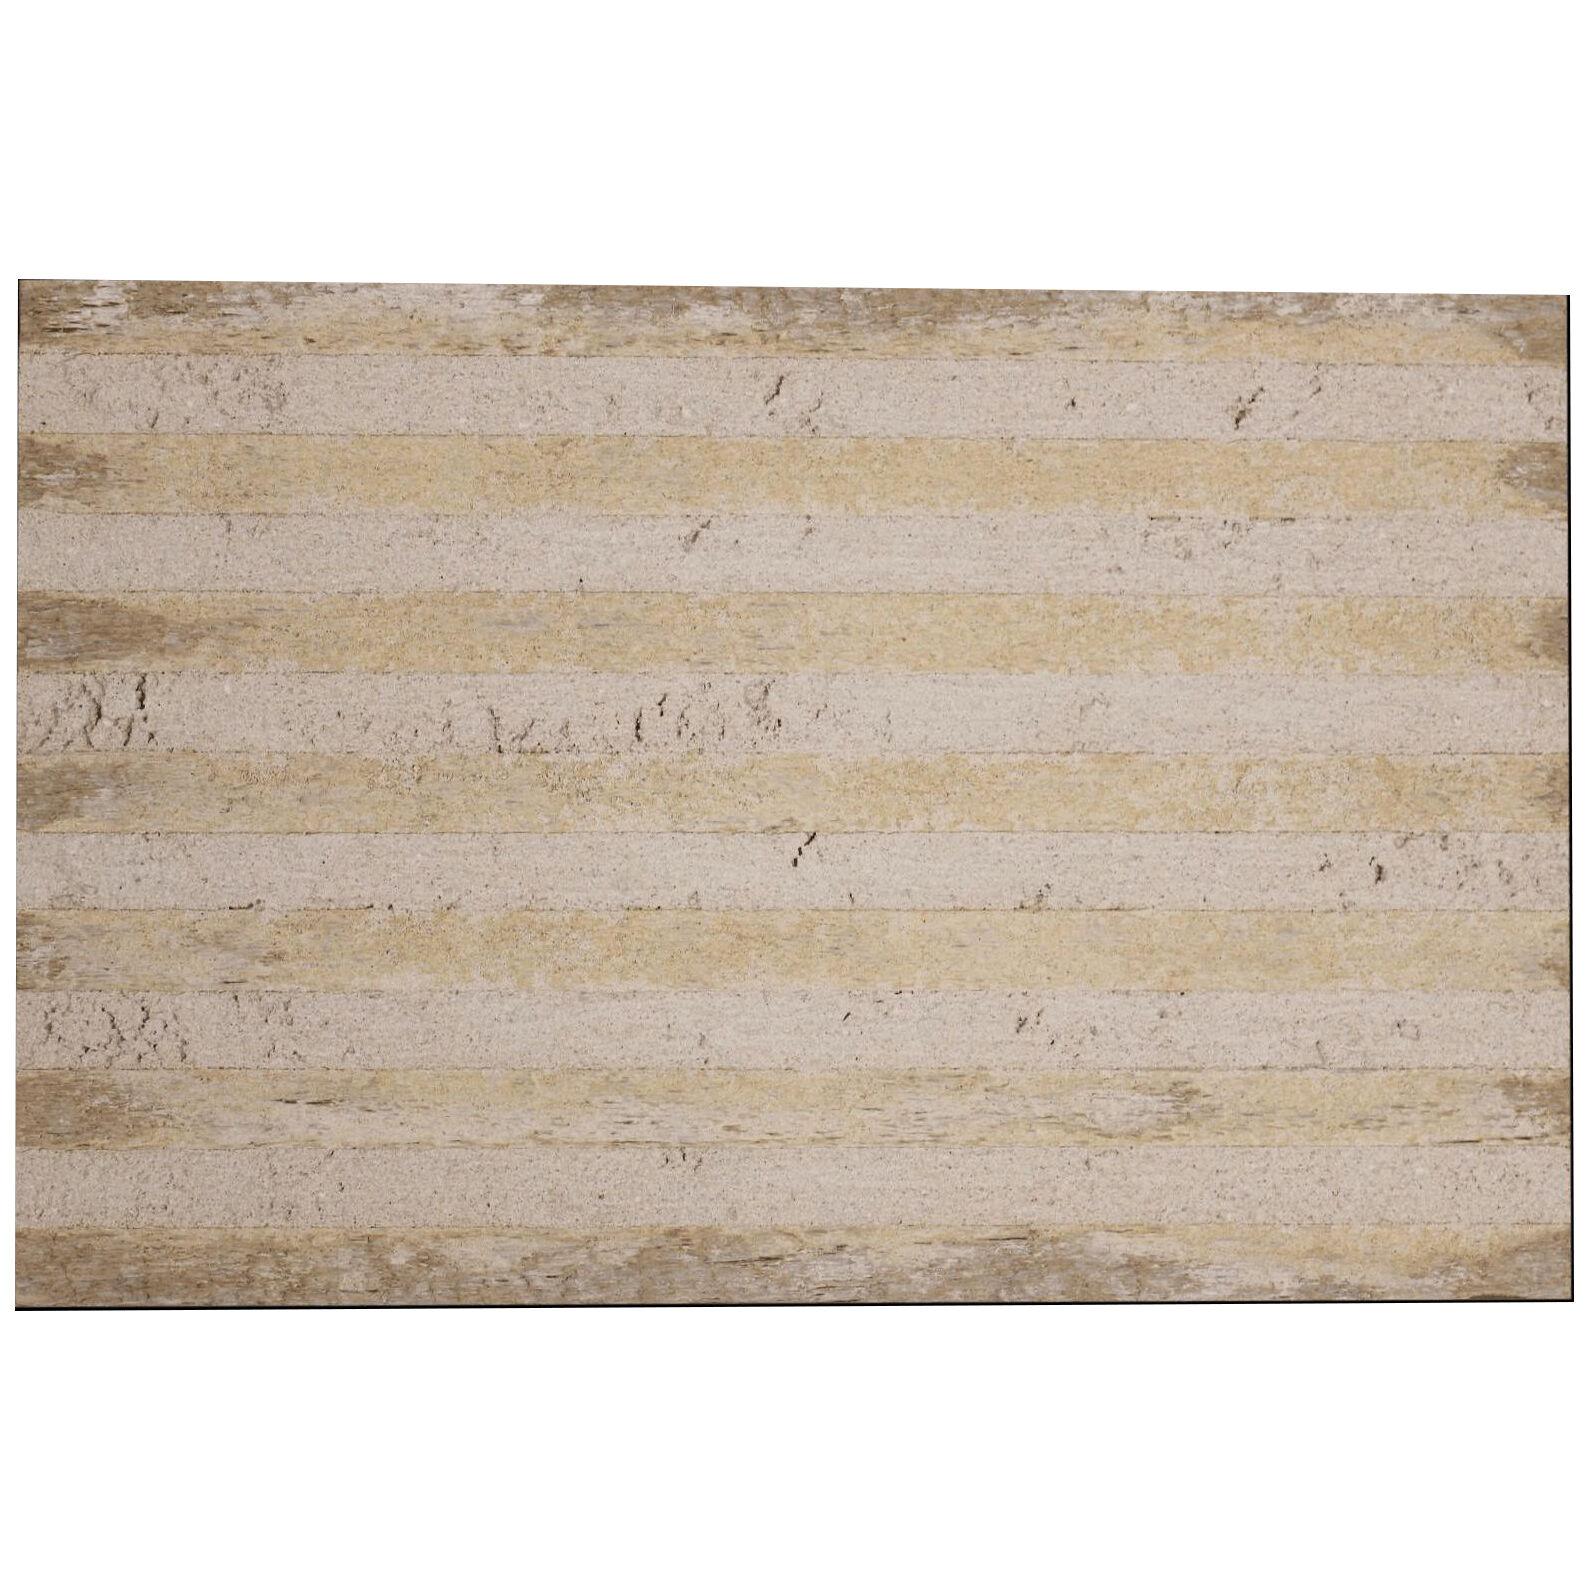 Joe Mancuso "Flag" Wood and Cement Block 1993